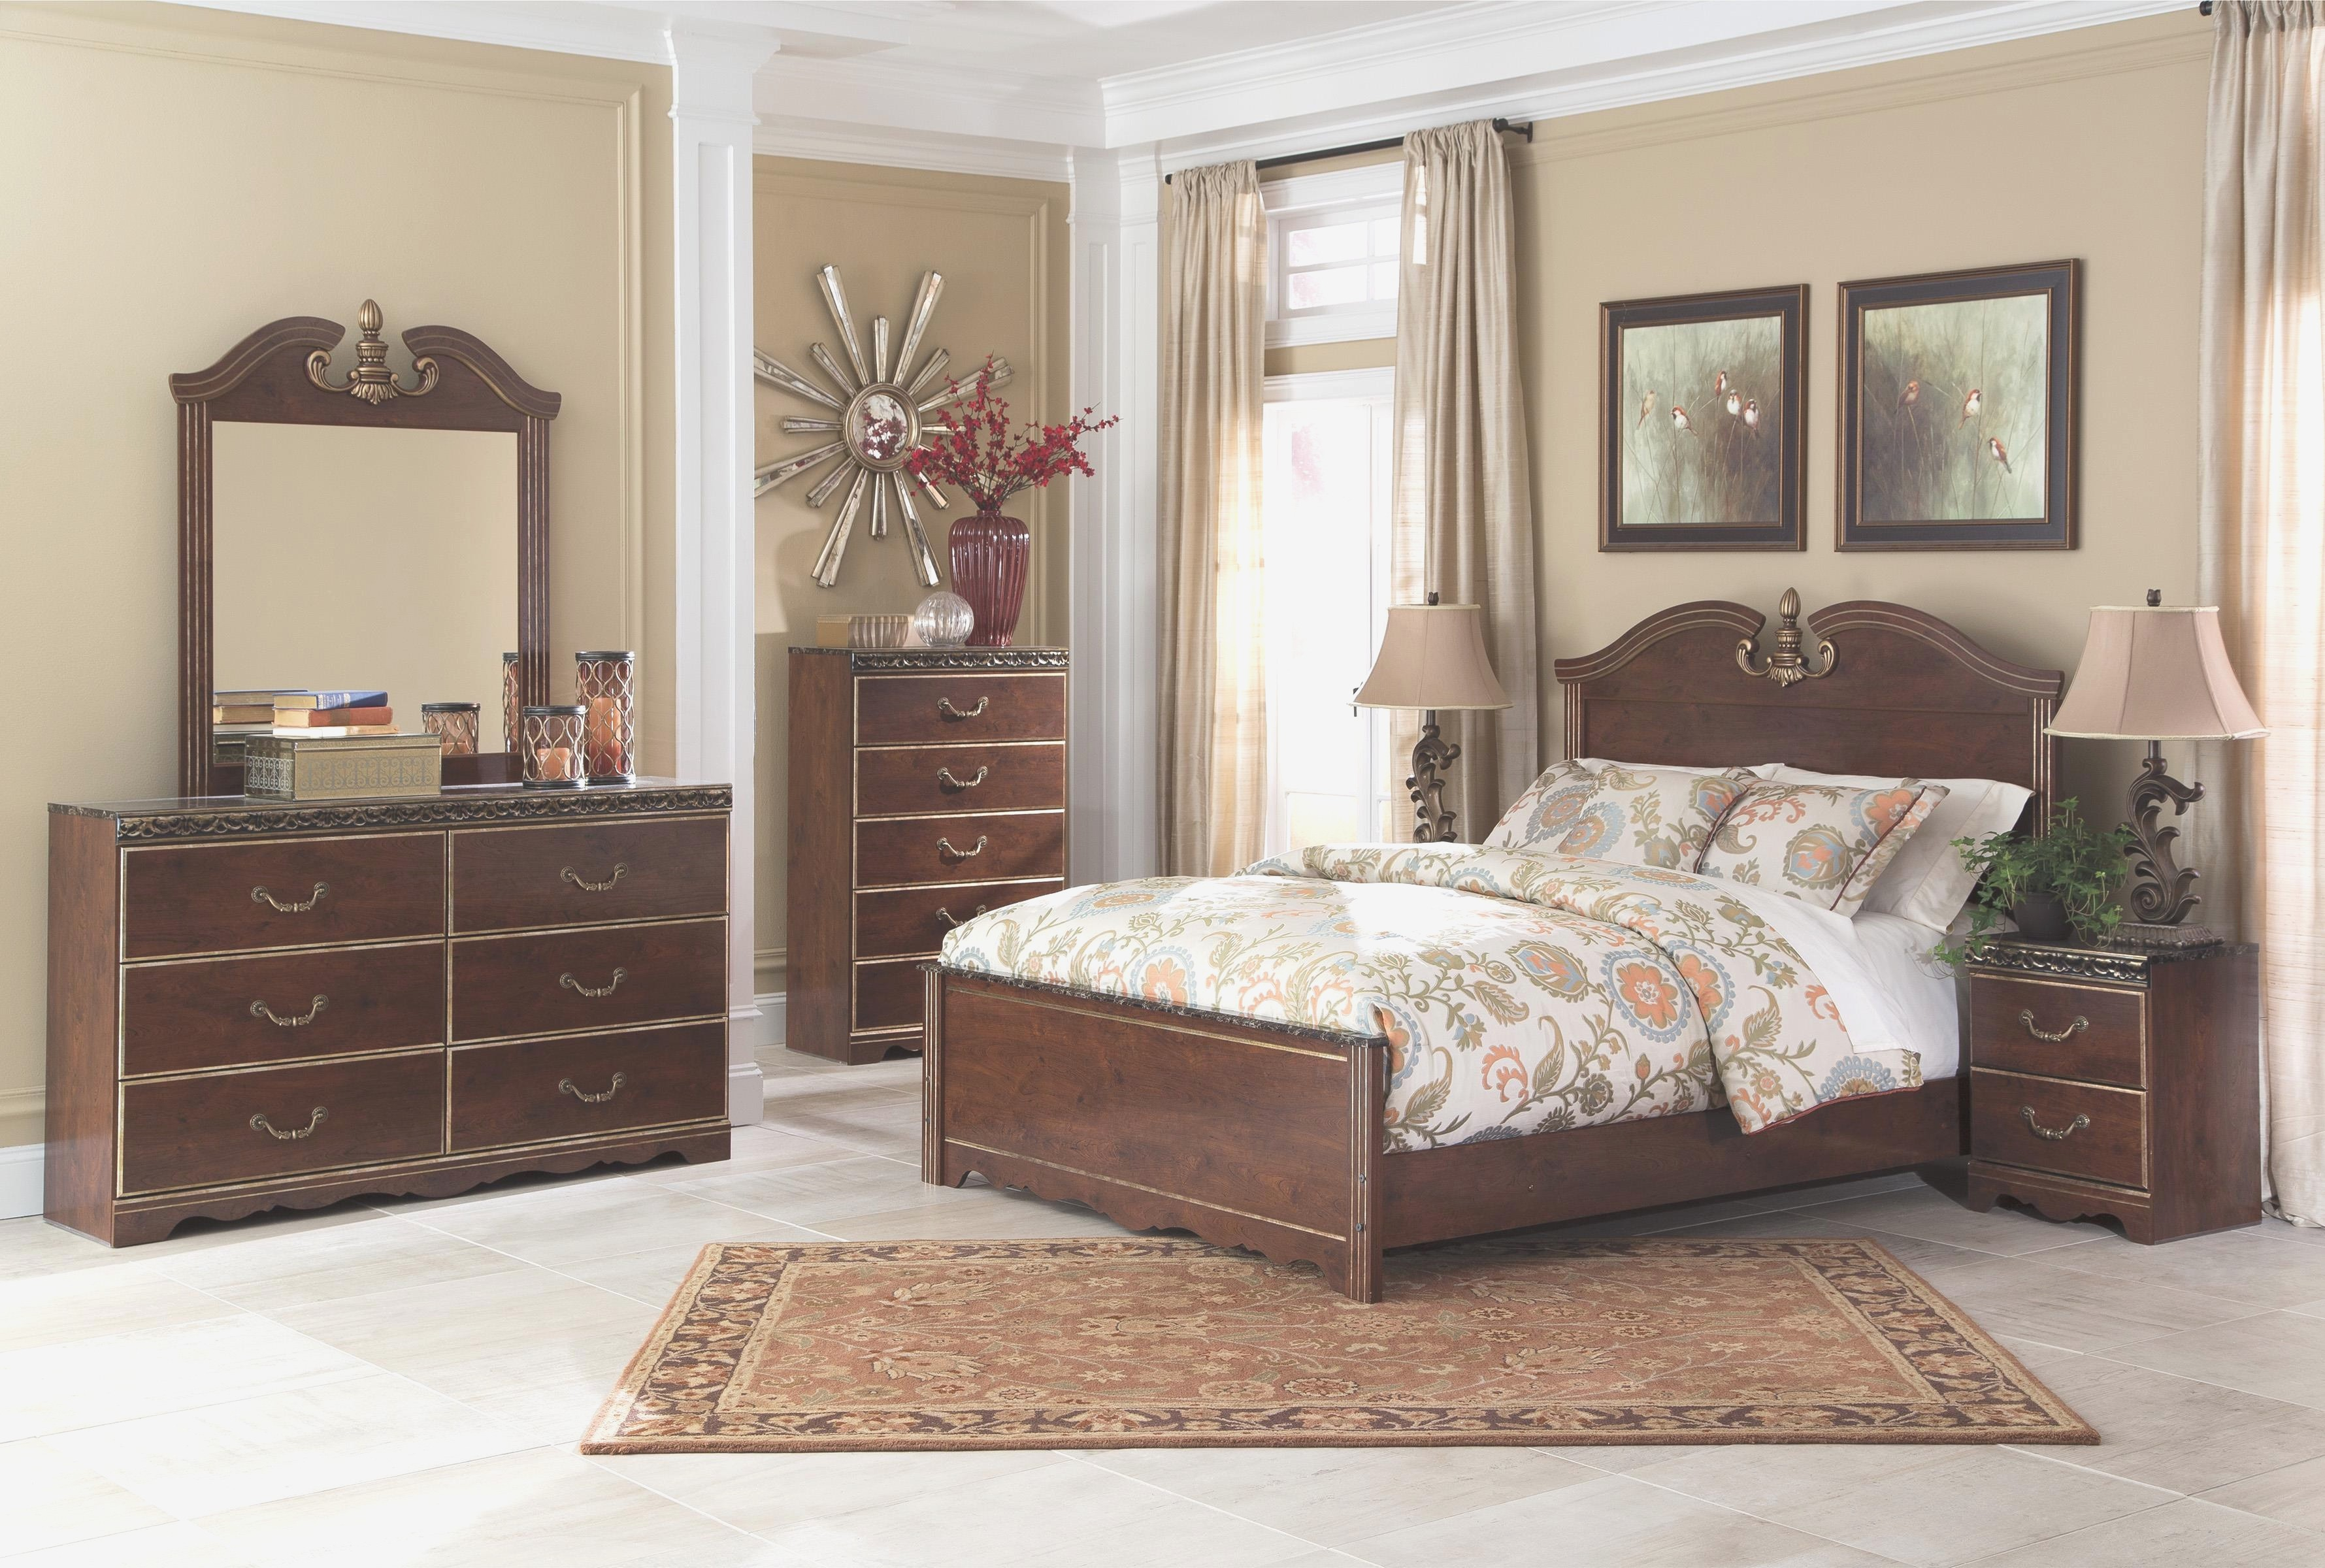 Rana Furniture Bedroom Sets Rana Furniture Full Bedroom Sets within sizing 3558 X 2400